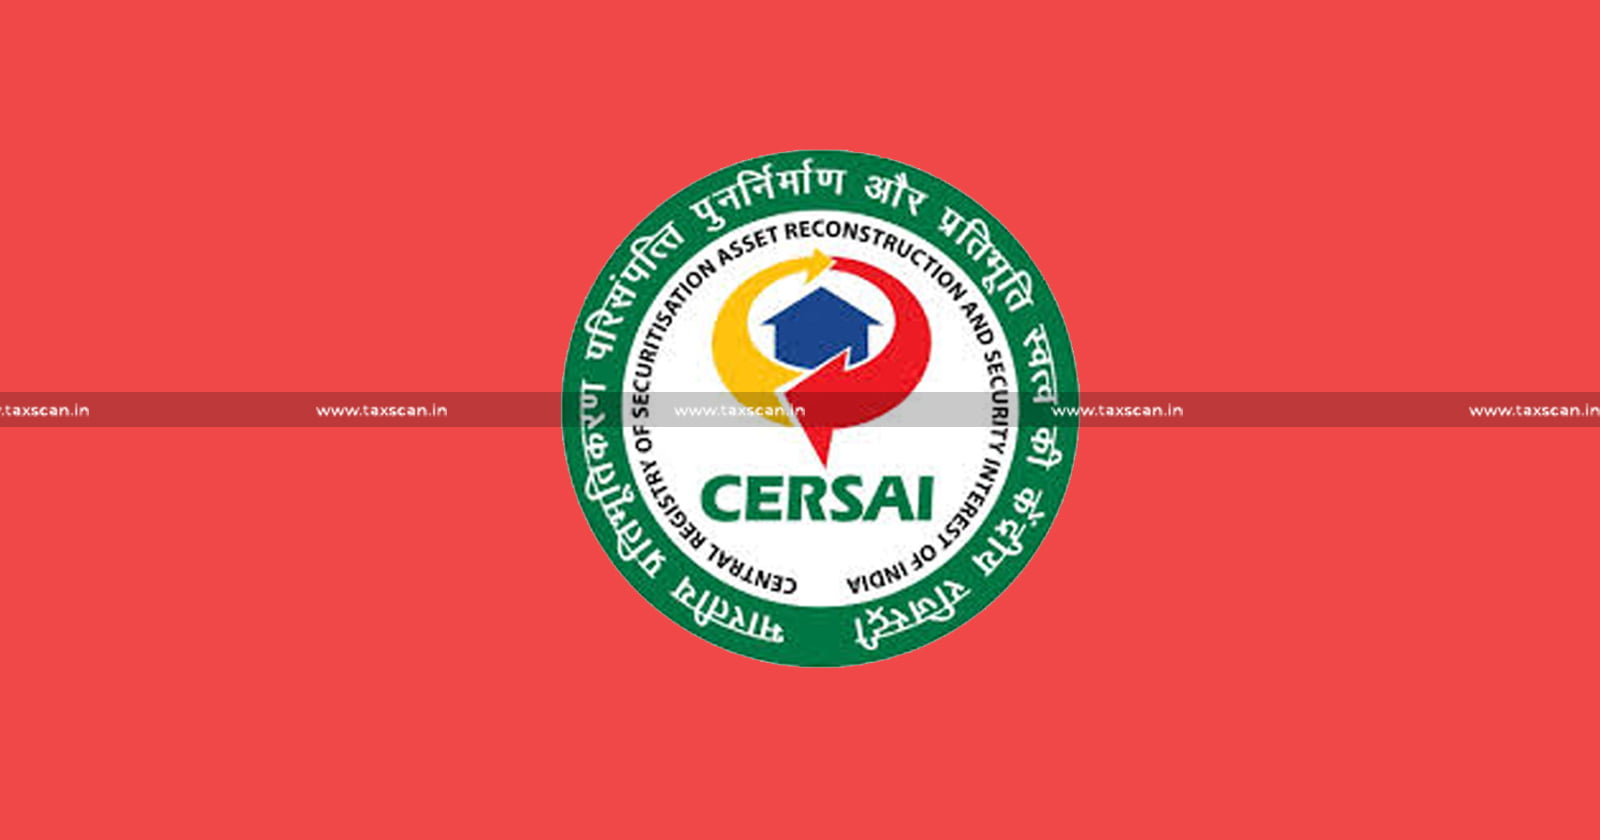 CERSAI - Relief to CERSAI - CESTAT - Service Tax demand - Service Tax - Customs - Excise - taxscan